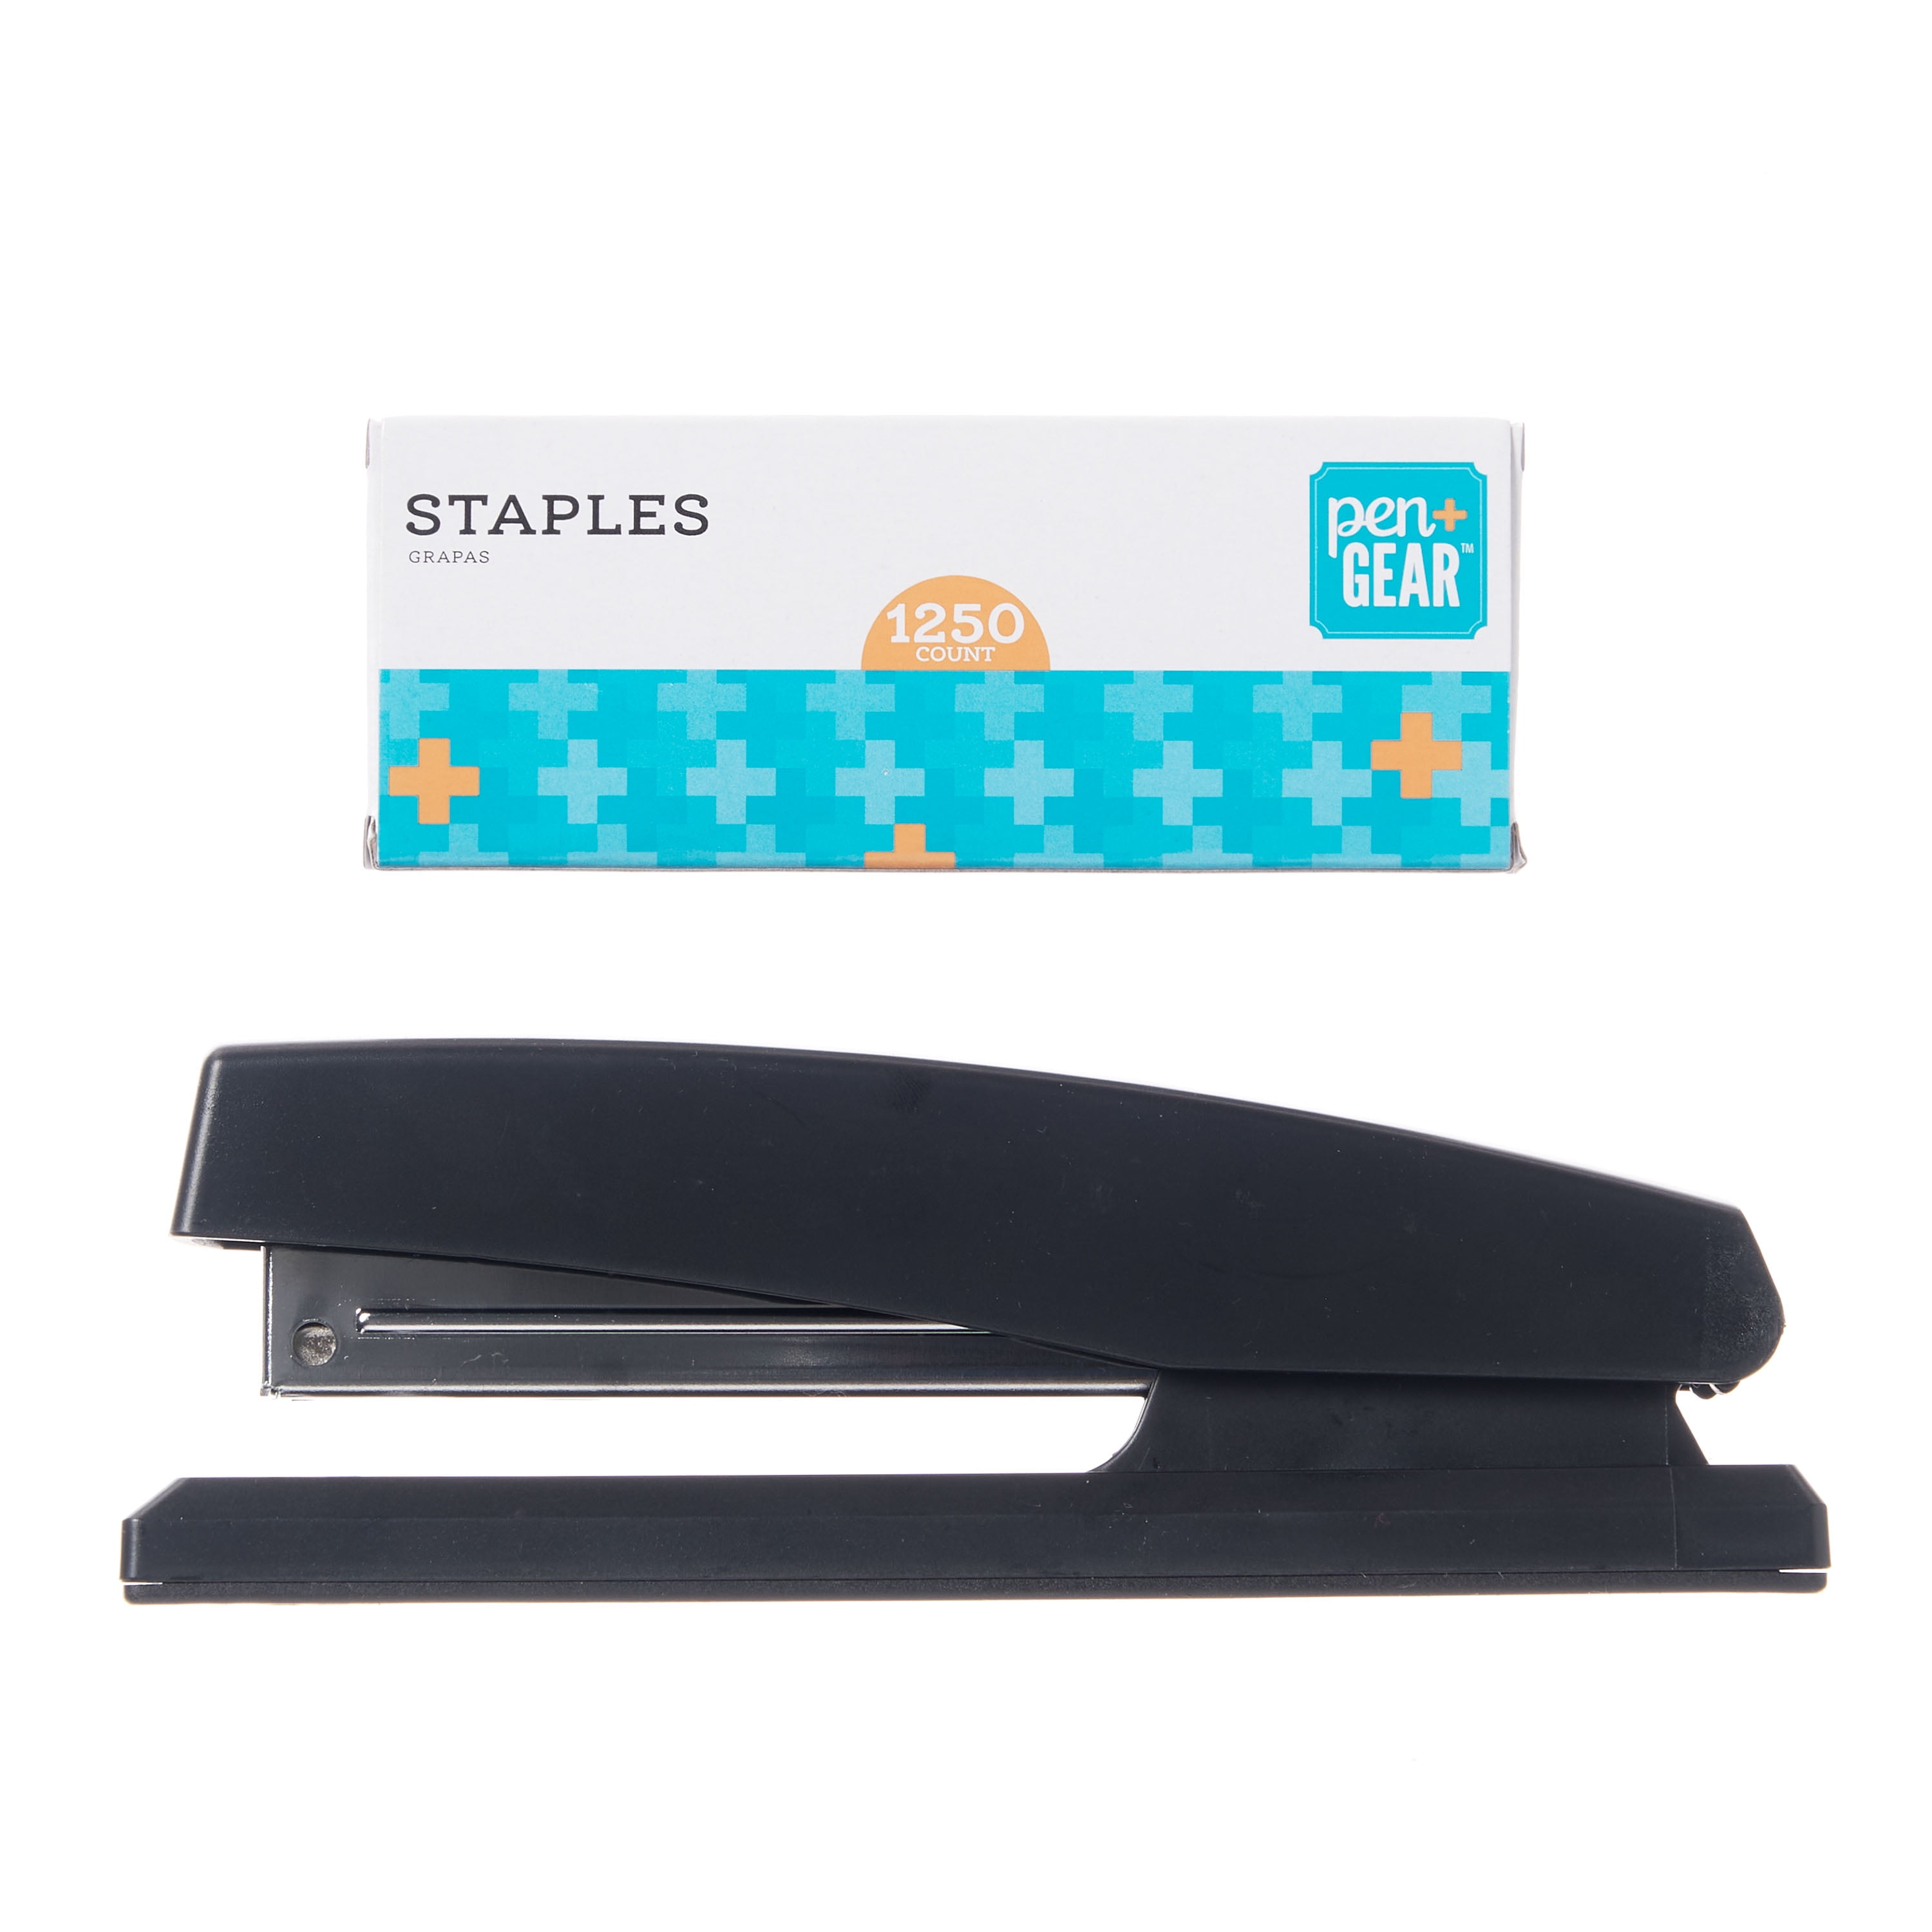 Pen + Gear Desk Stapler with 1250 Staples, 20-Sheet Capacity, Black, Office  Stapler - DroneUp Delivery